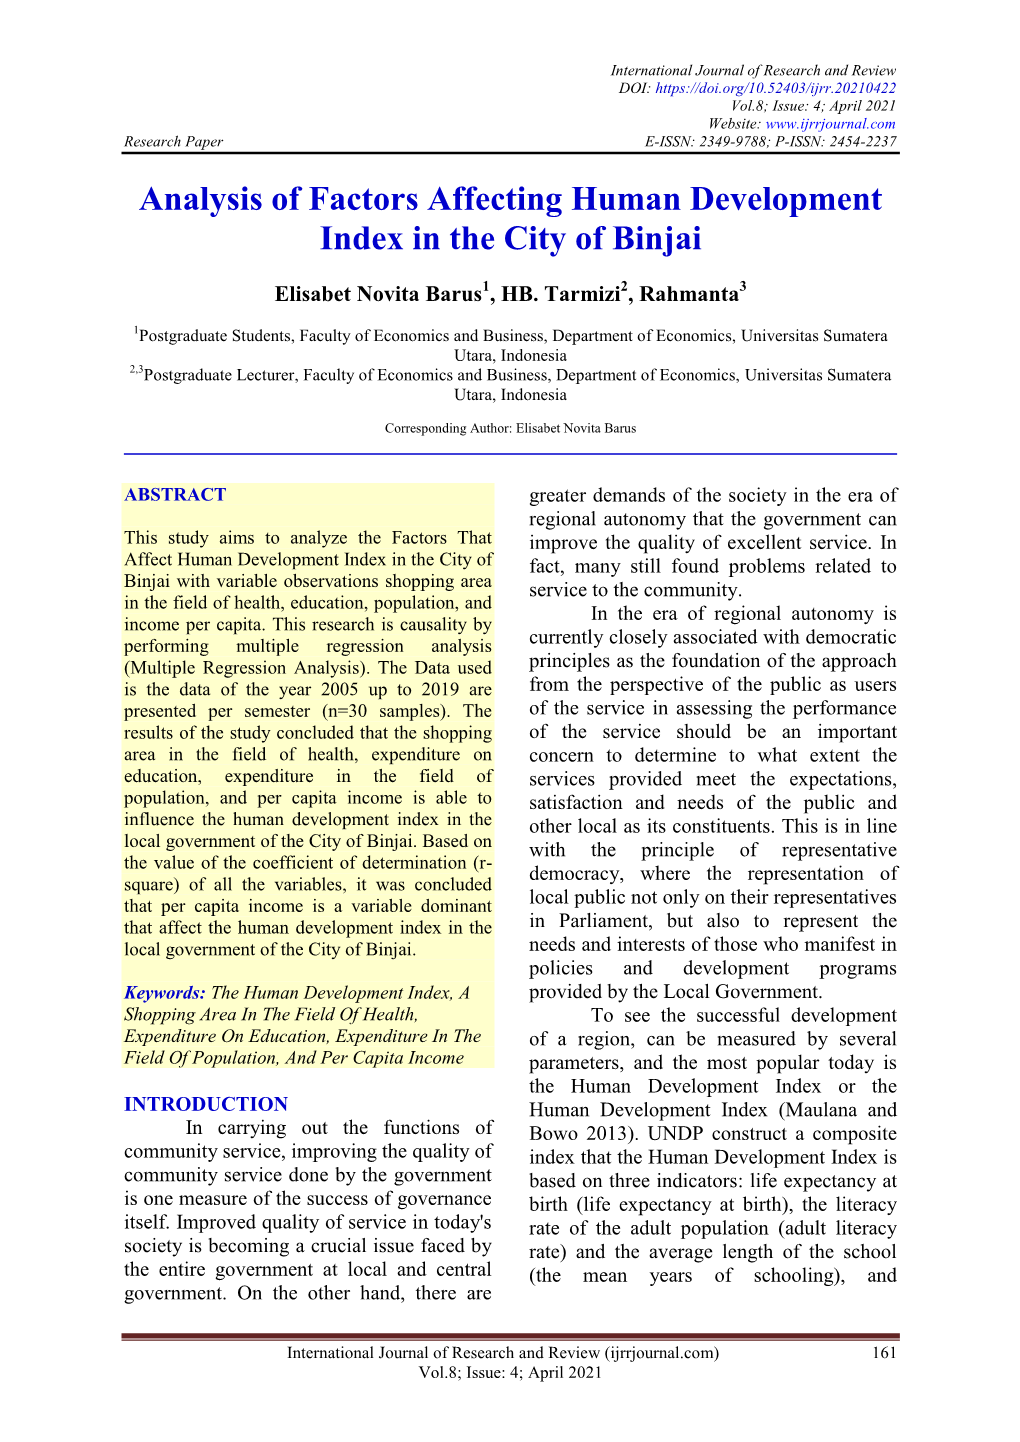 Analysis of Factors Affecting Human Development Index in the City of Binjai